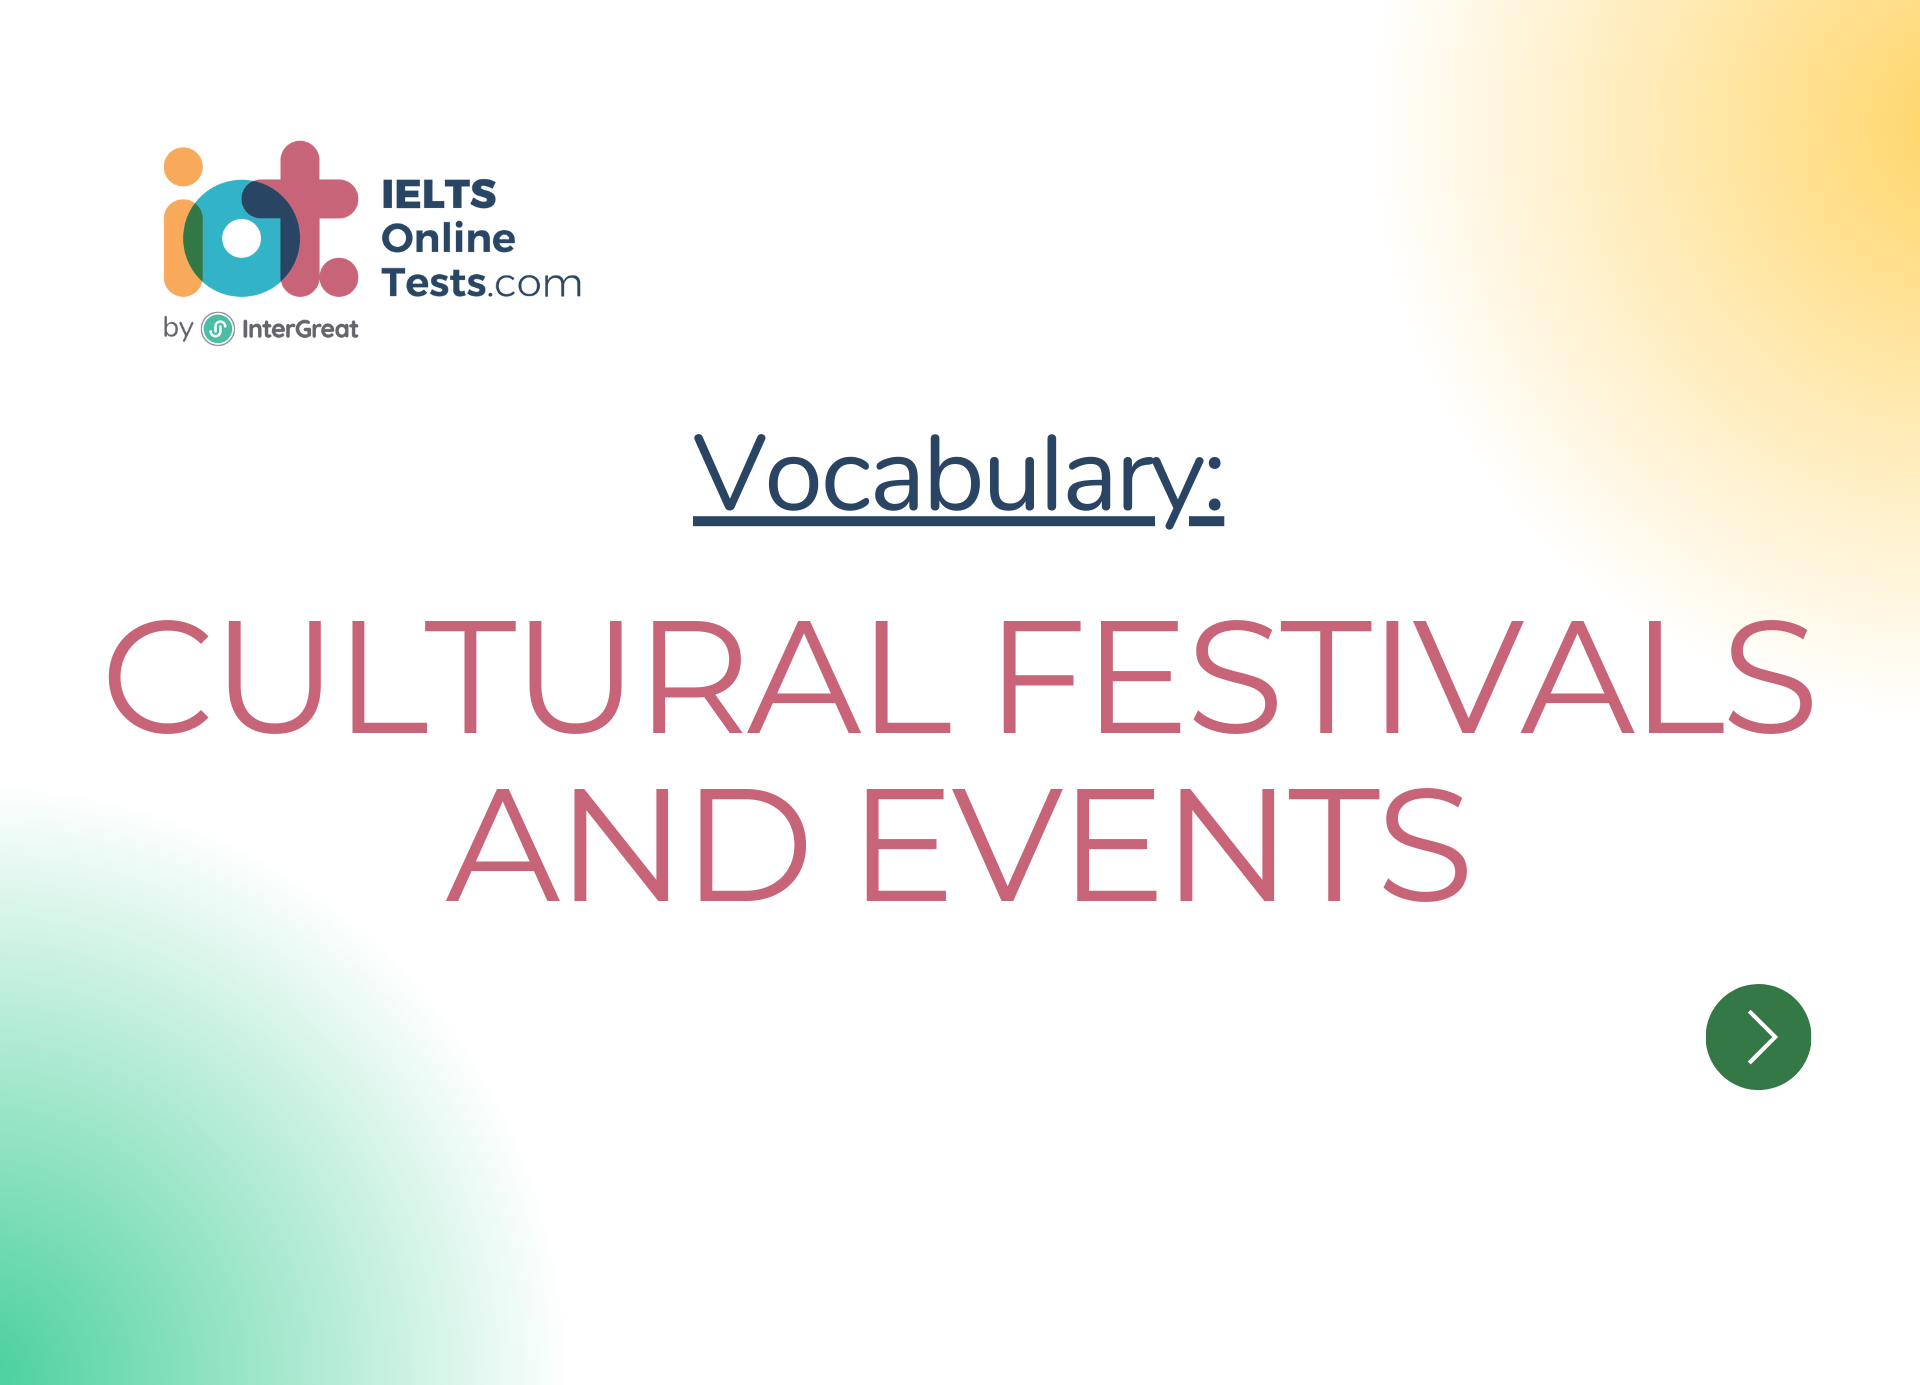 Cultural festivals and events